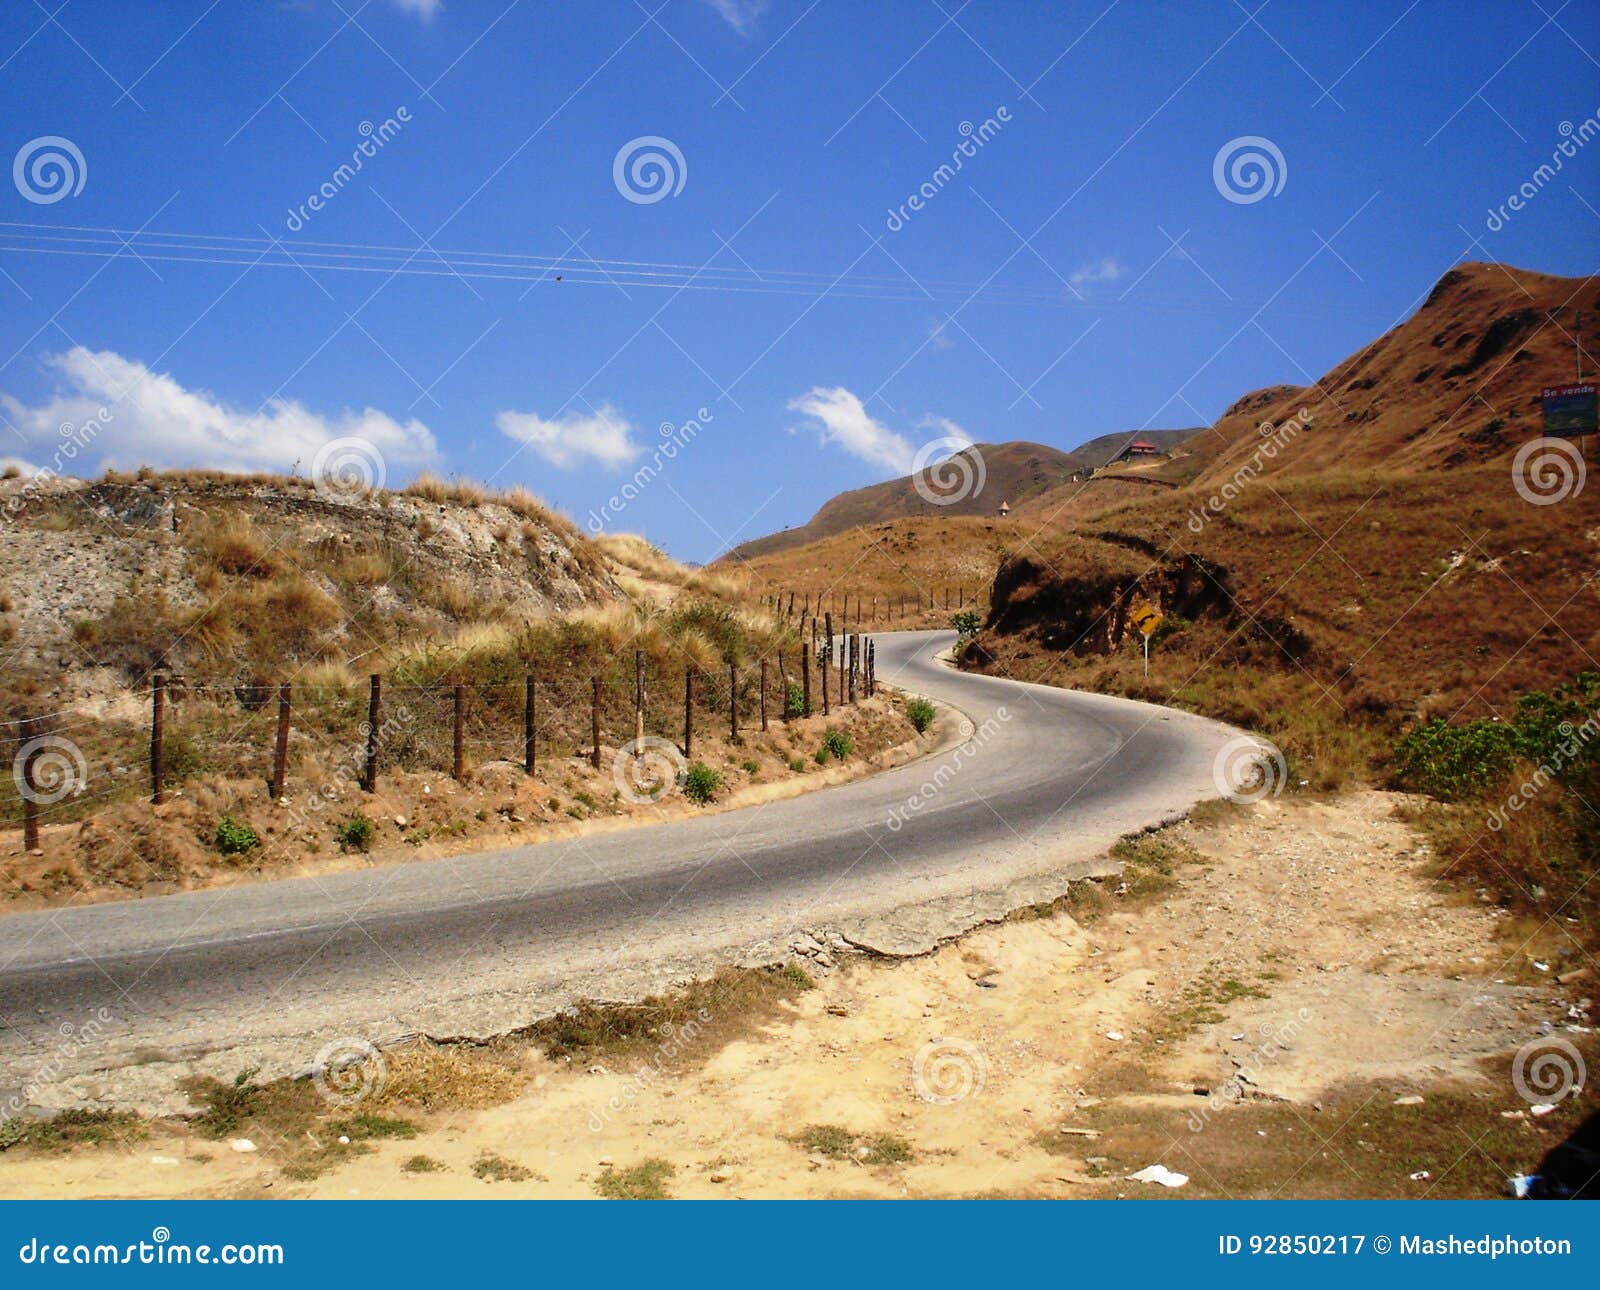 road at mountain